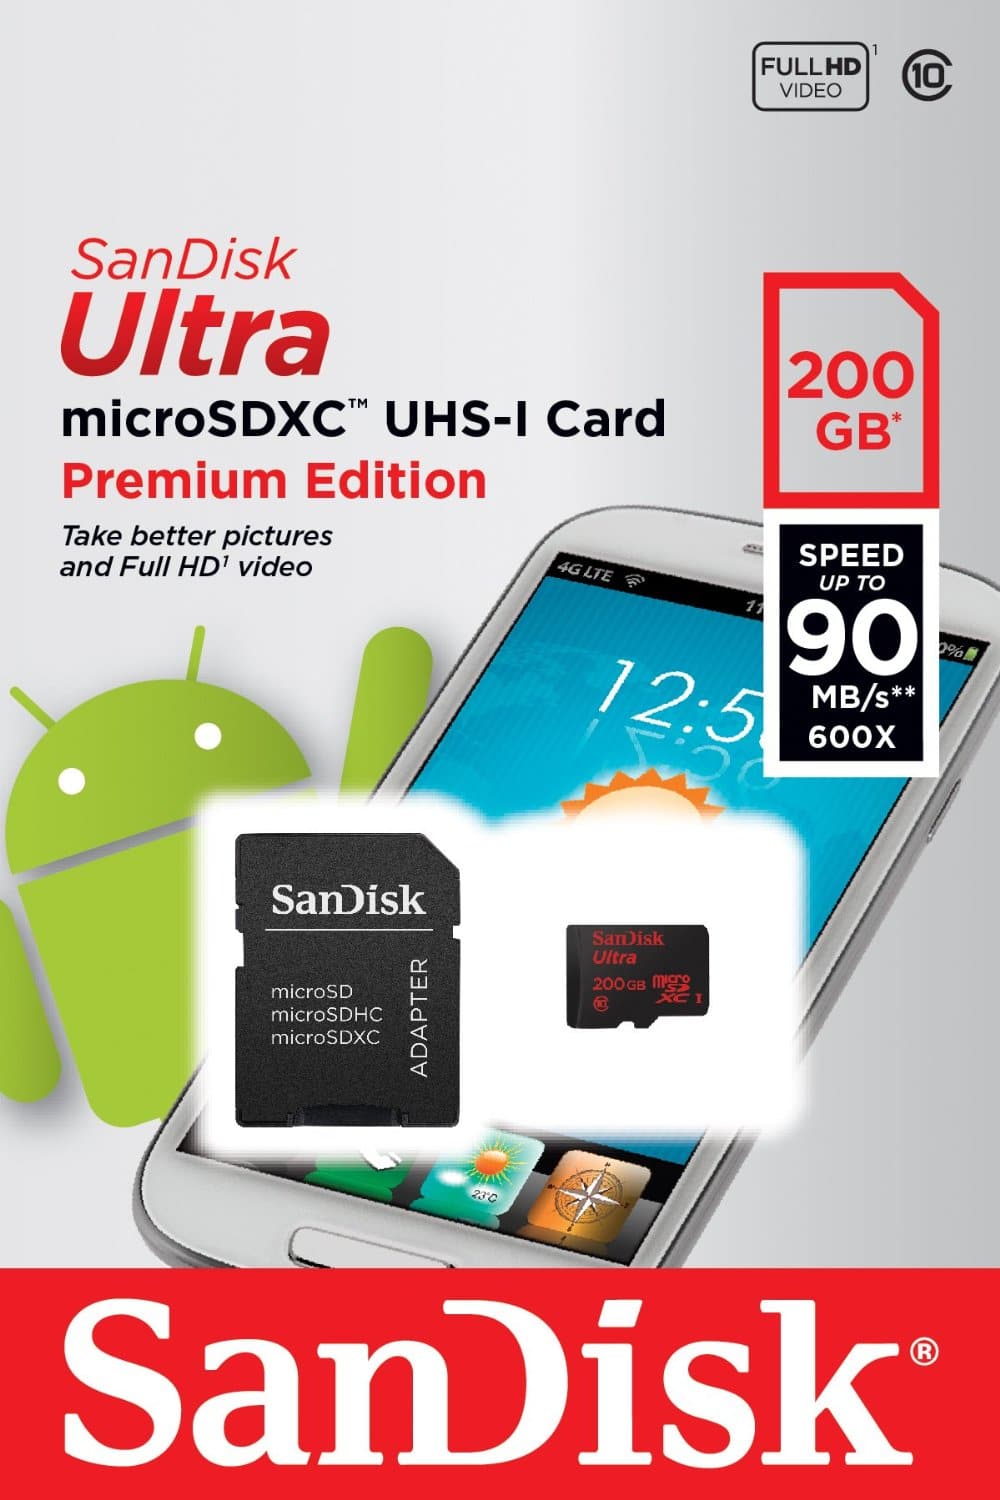 SanDisk Ultra 200GB Micro SD